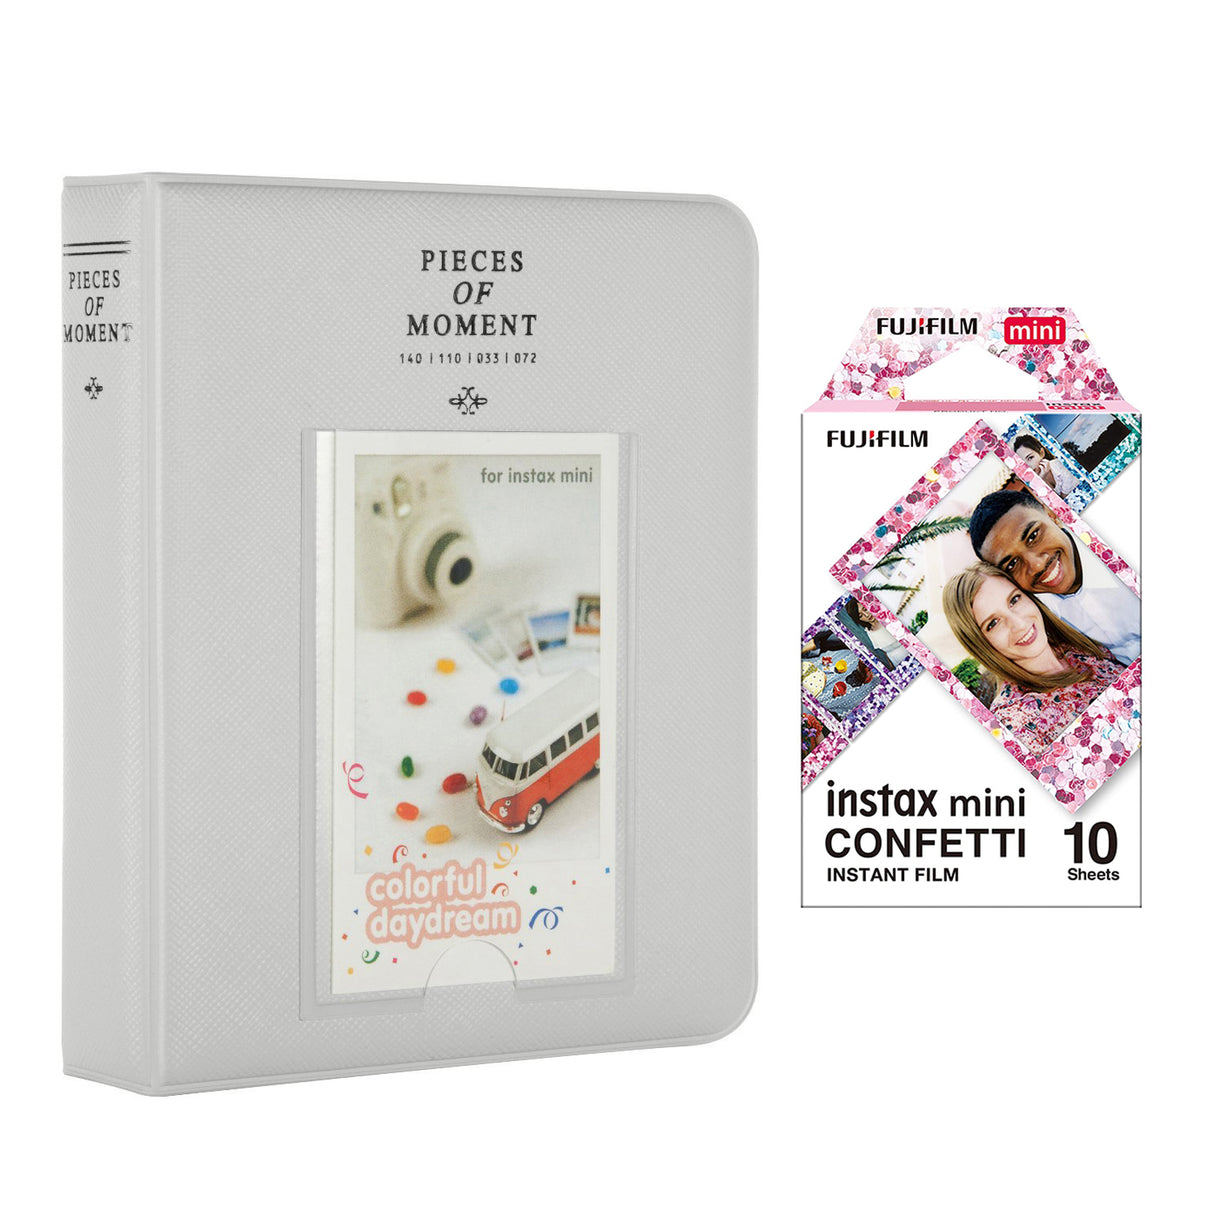 Fujifilm Instax Mini 10X1 confetti Instant Film with Instax Time Photo Album 64 Sheets Smokey white